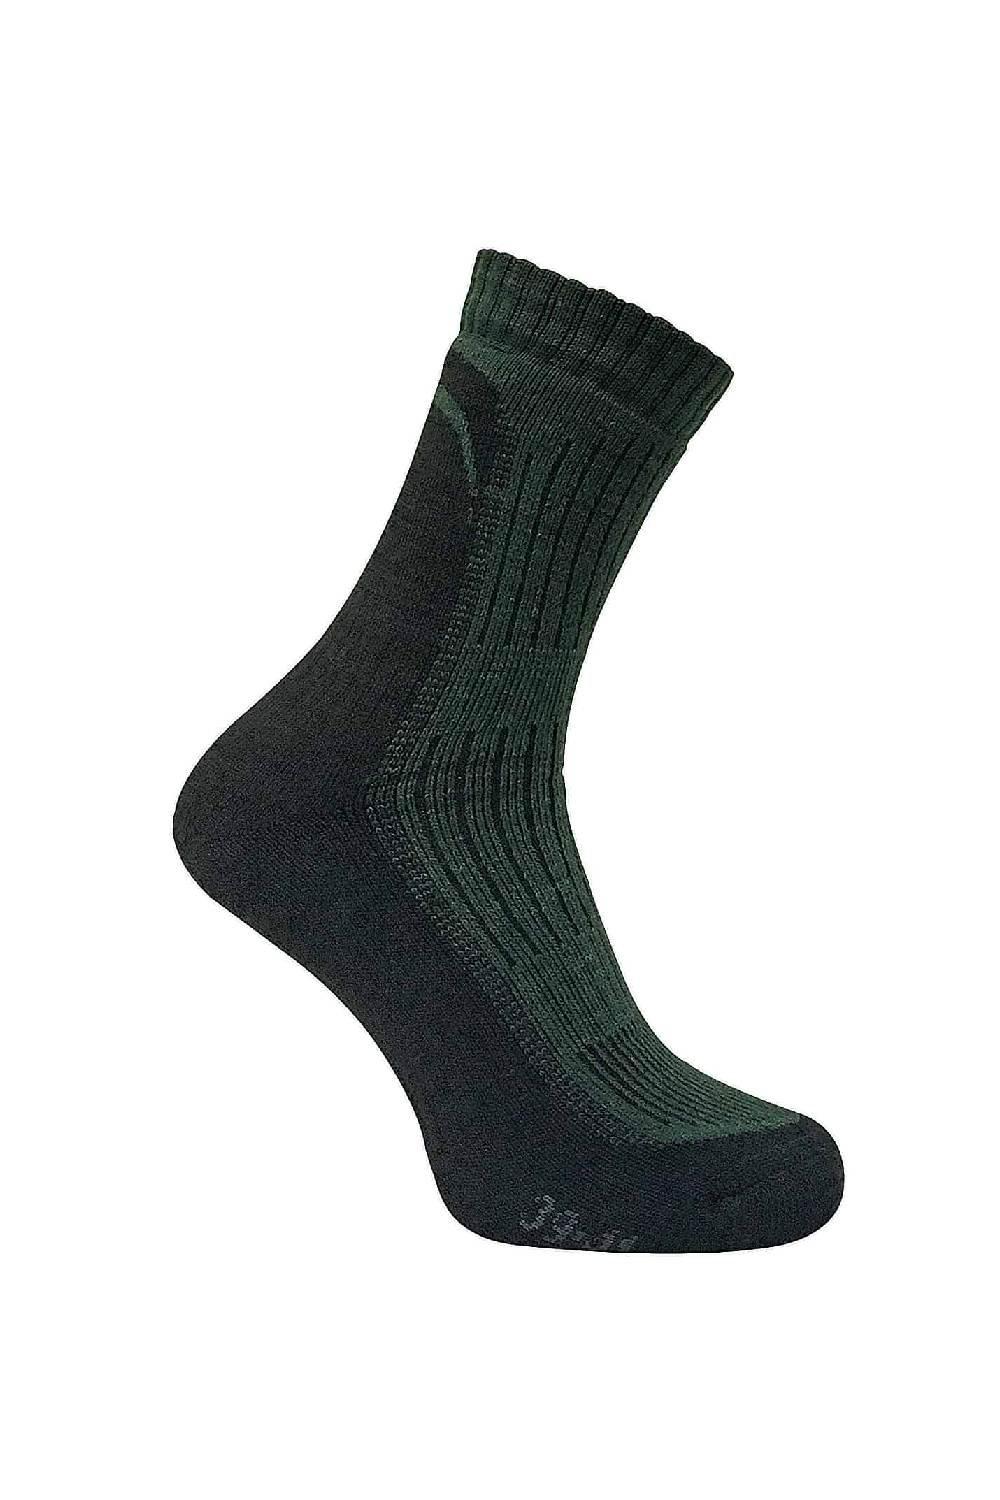 Reinforced Heel and Toe Merino Wool Hiking Socks for Boots